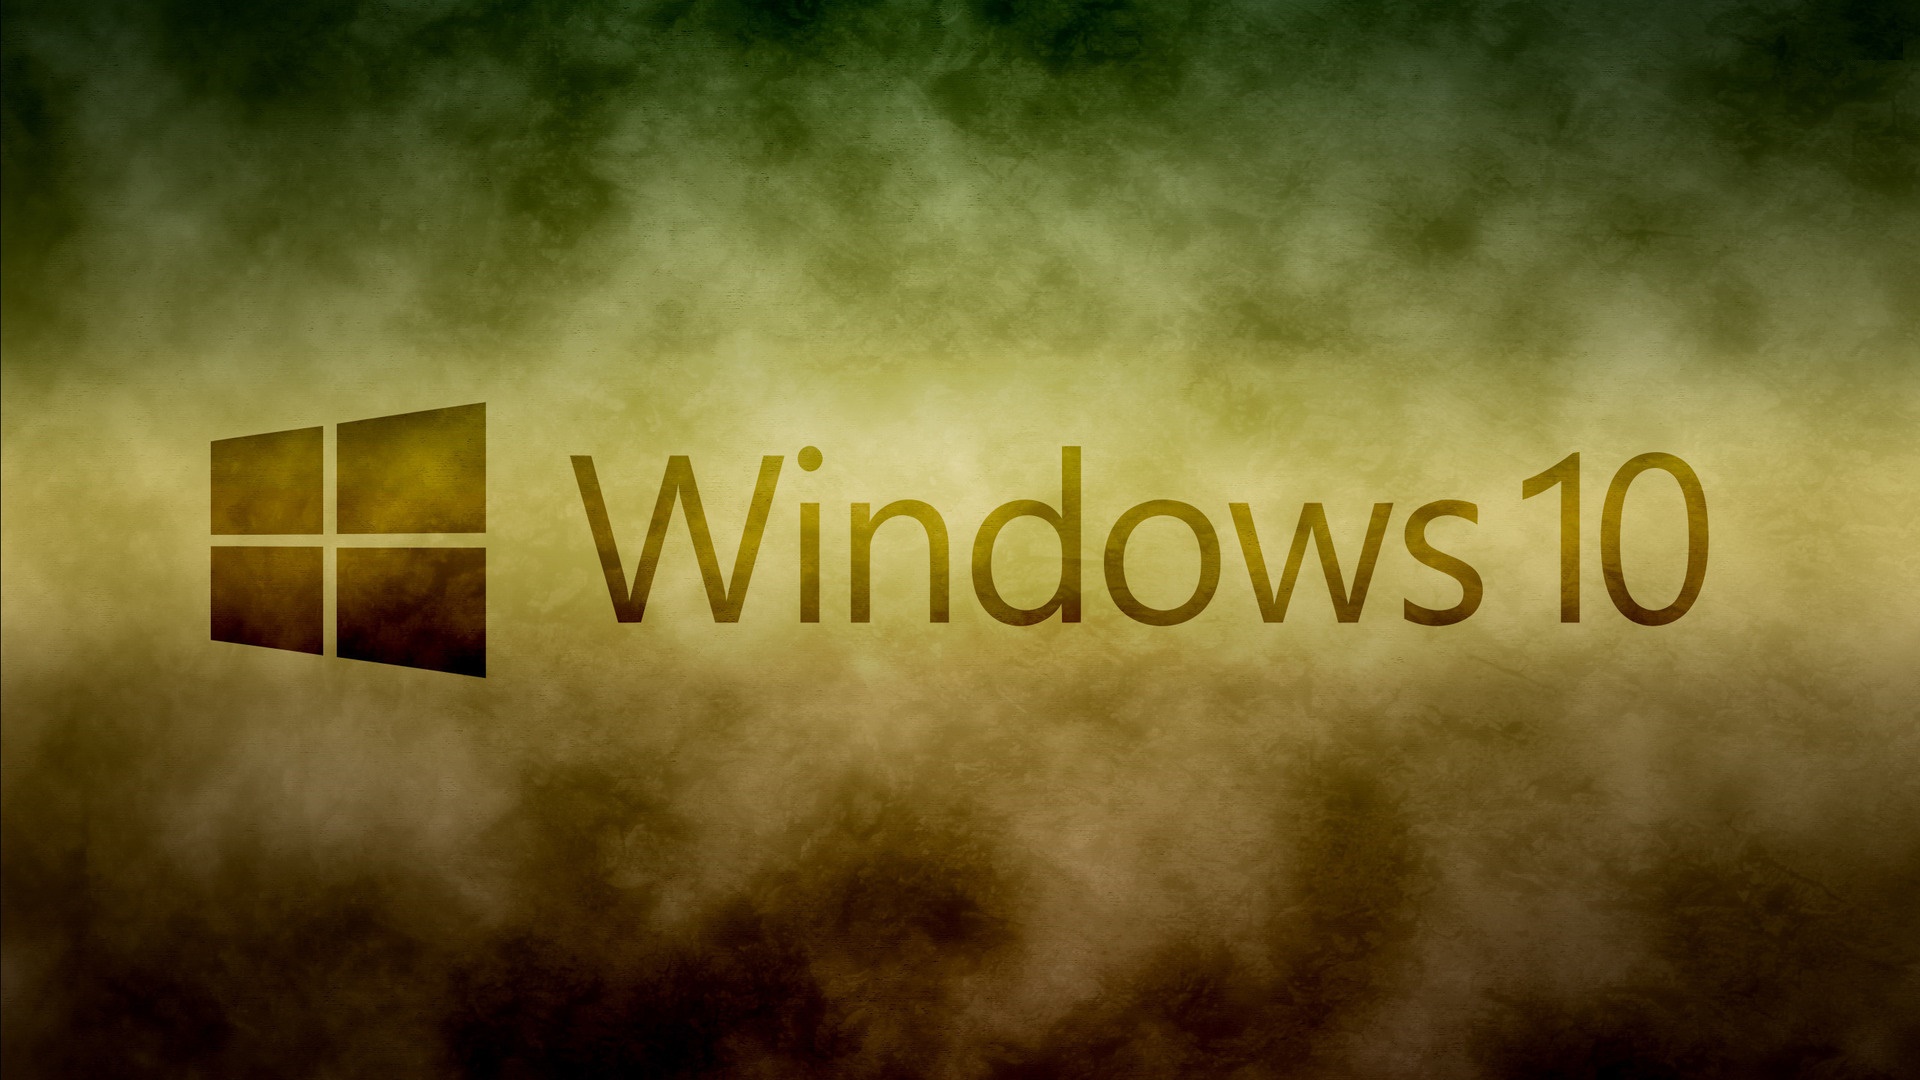 Laptop HD Wallpapers For Windows 10 | PixelsTalk.Net, wallpaper hd laptop windows 10